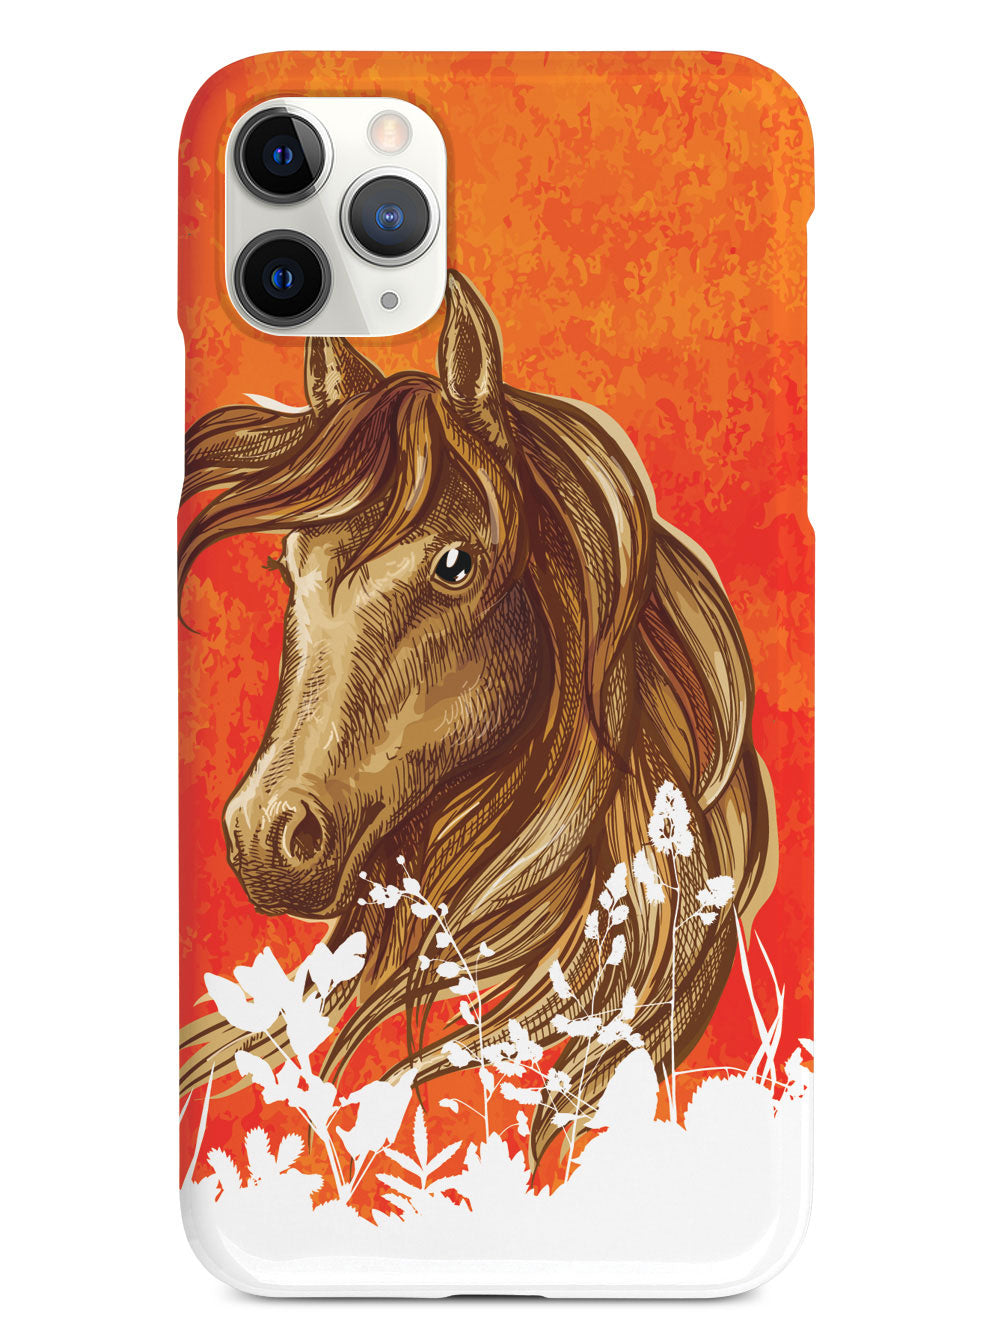 Watercolor Horse Illustration - Sunset Orange & Red Case